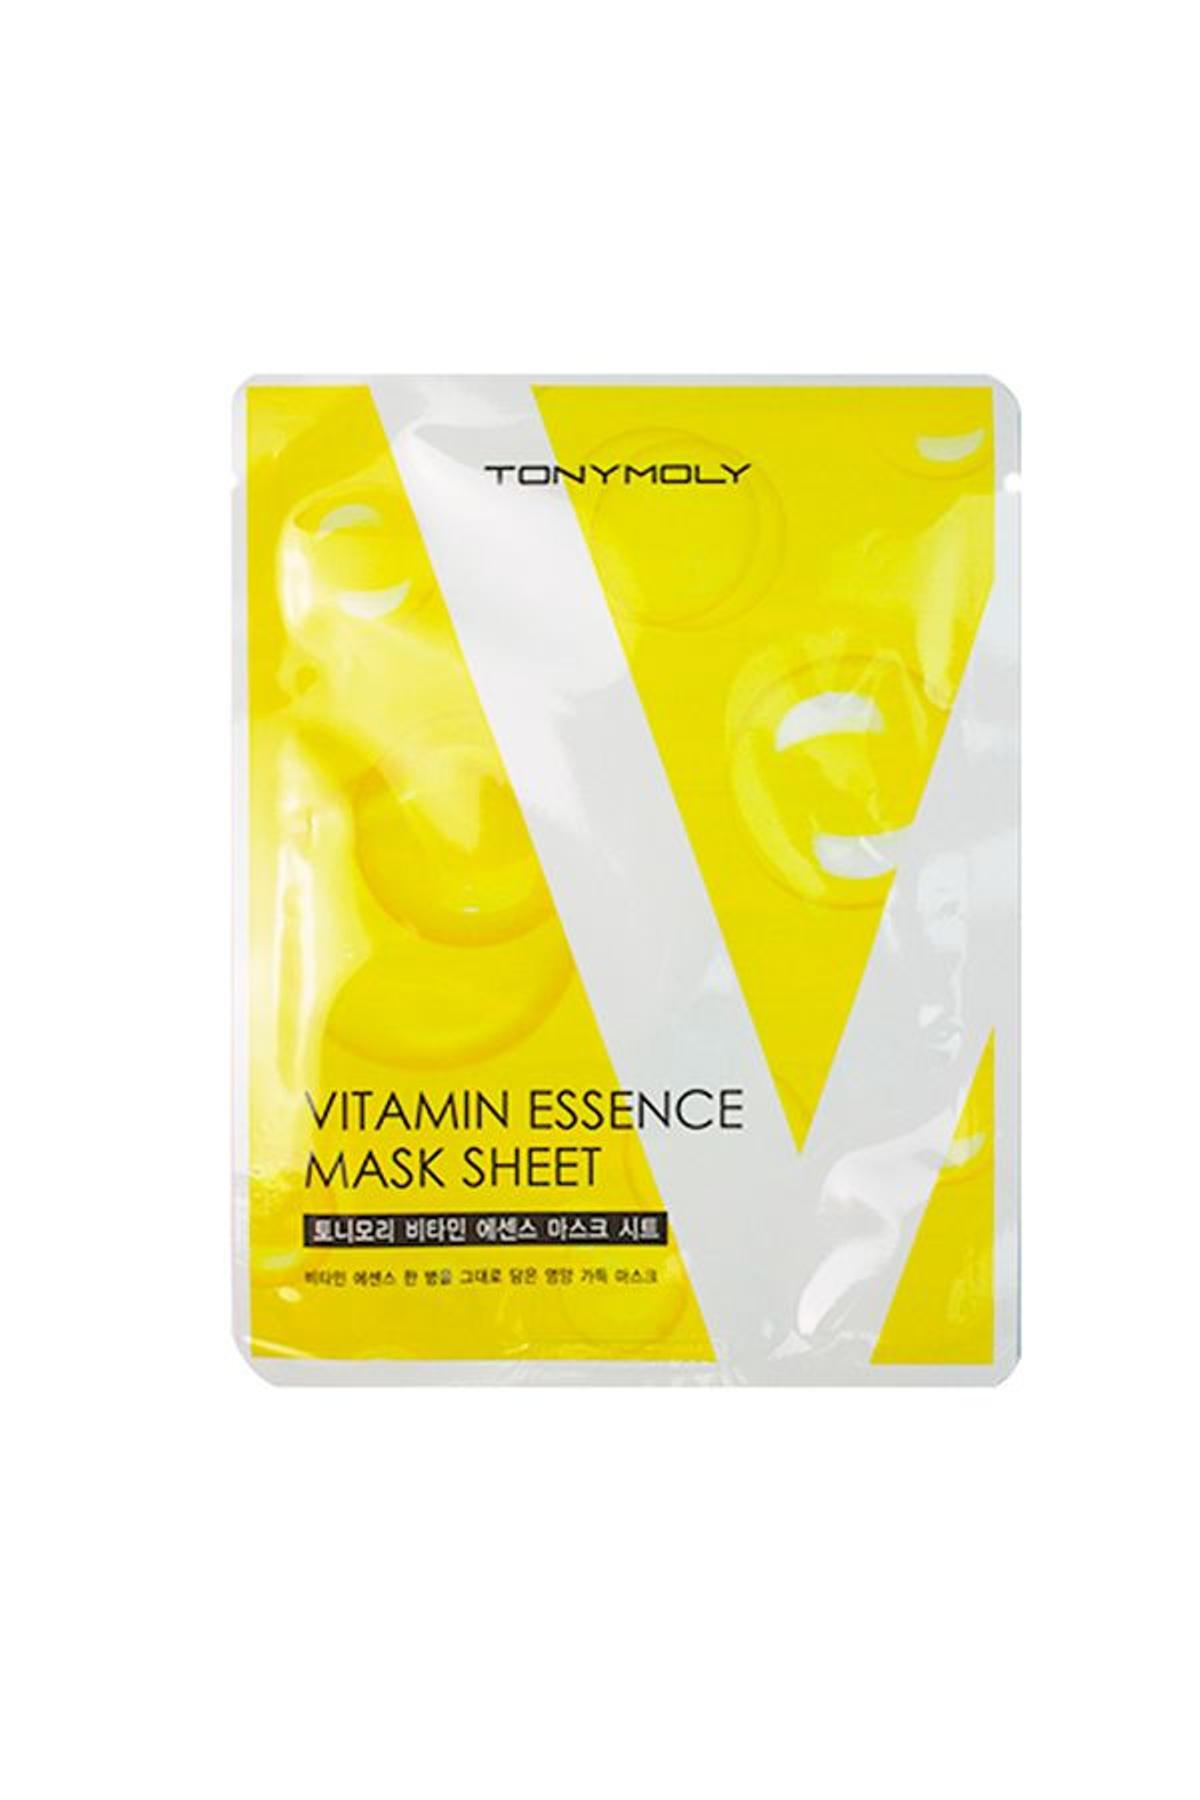 Mascarillas para la rentrée: Vitamin Essence Mask Sheet de Tony Moly